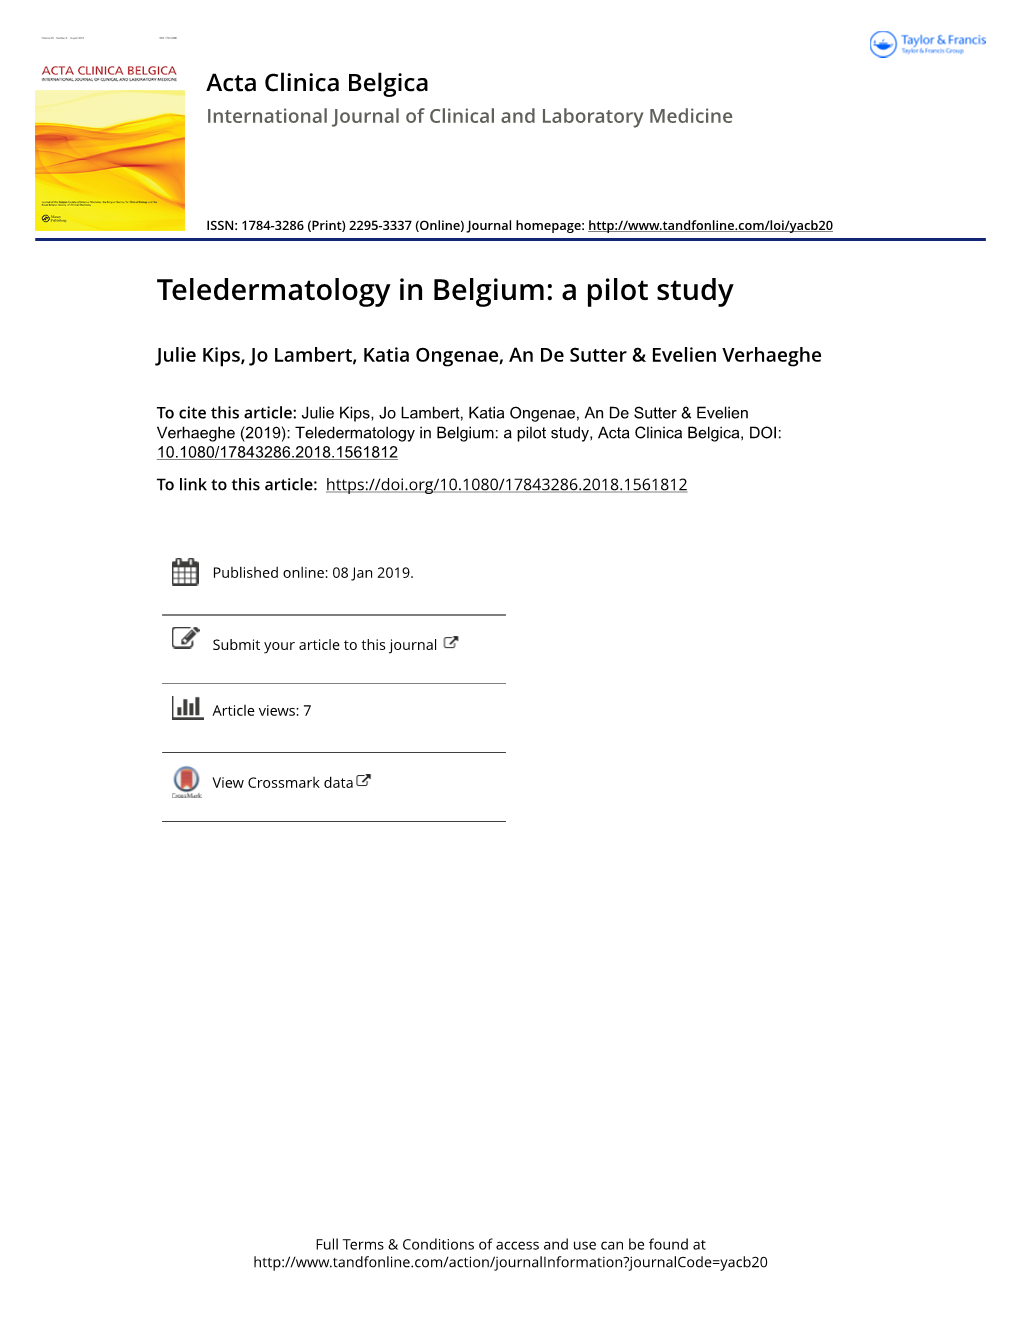 Teledermatology in Belgium: a Pilot Study